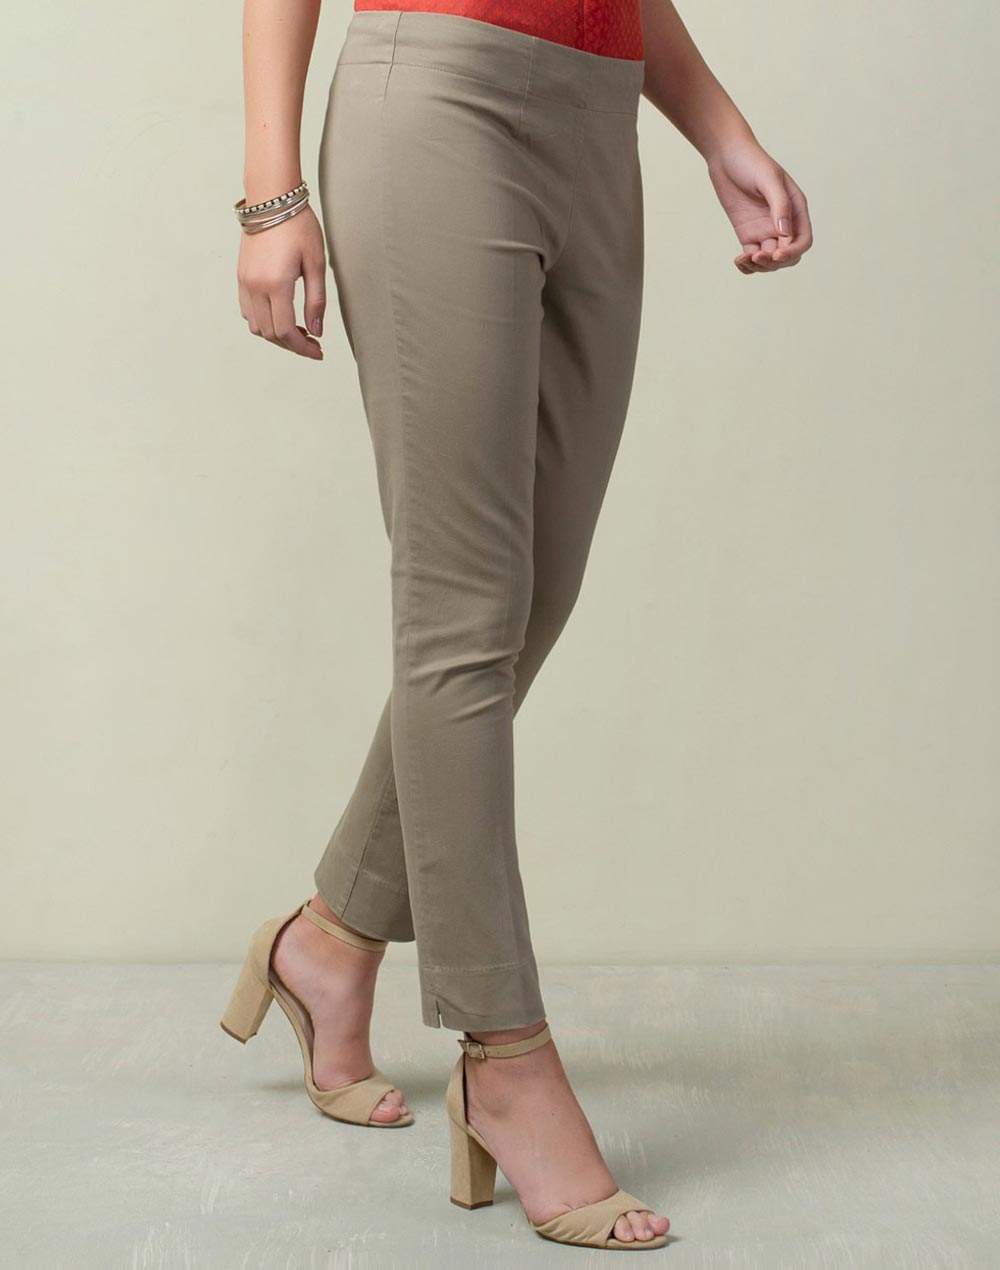 Women's cotton pant (skin color) comfortable stretchable elastic